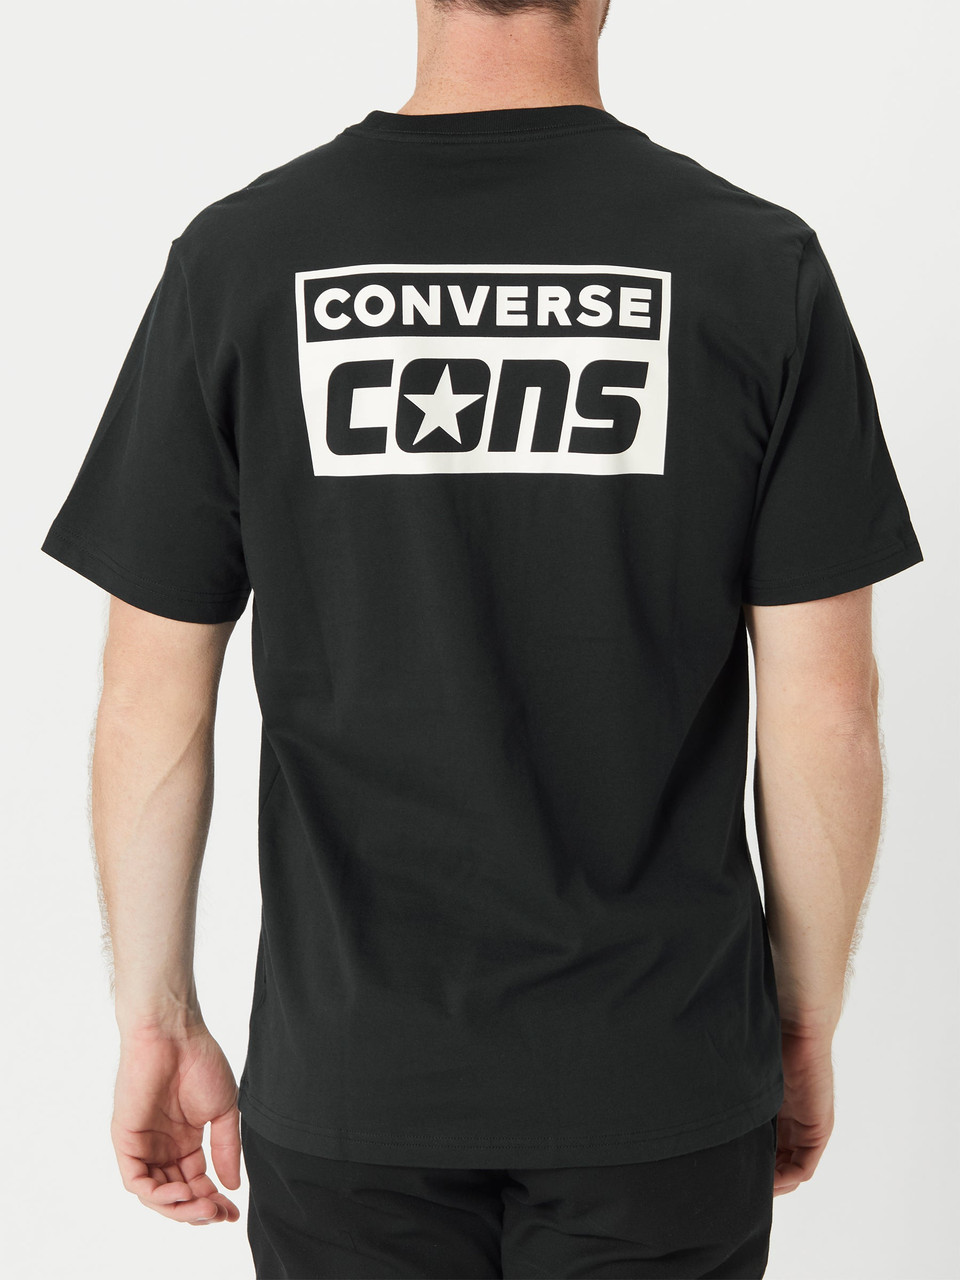 Converse Cons SS T-Shirt